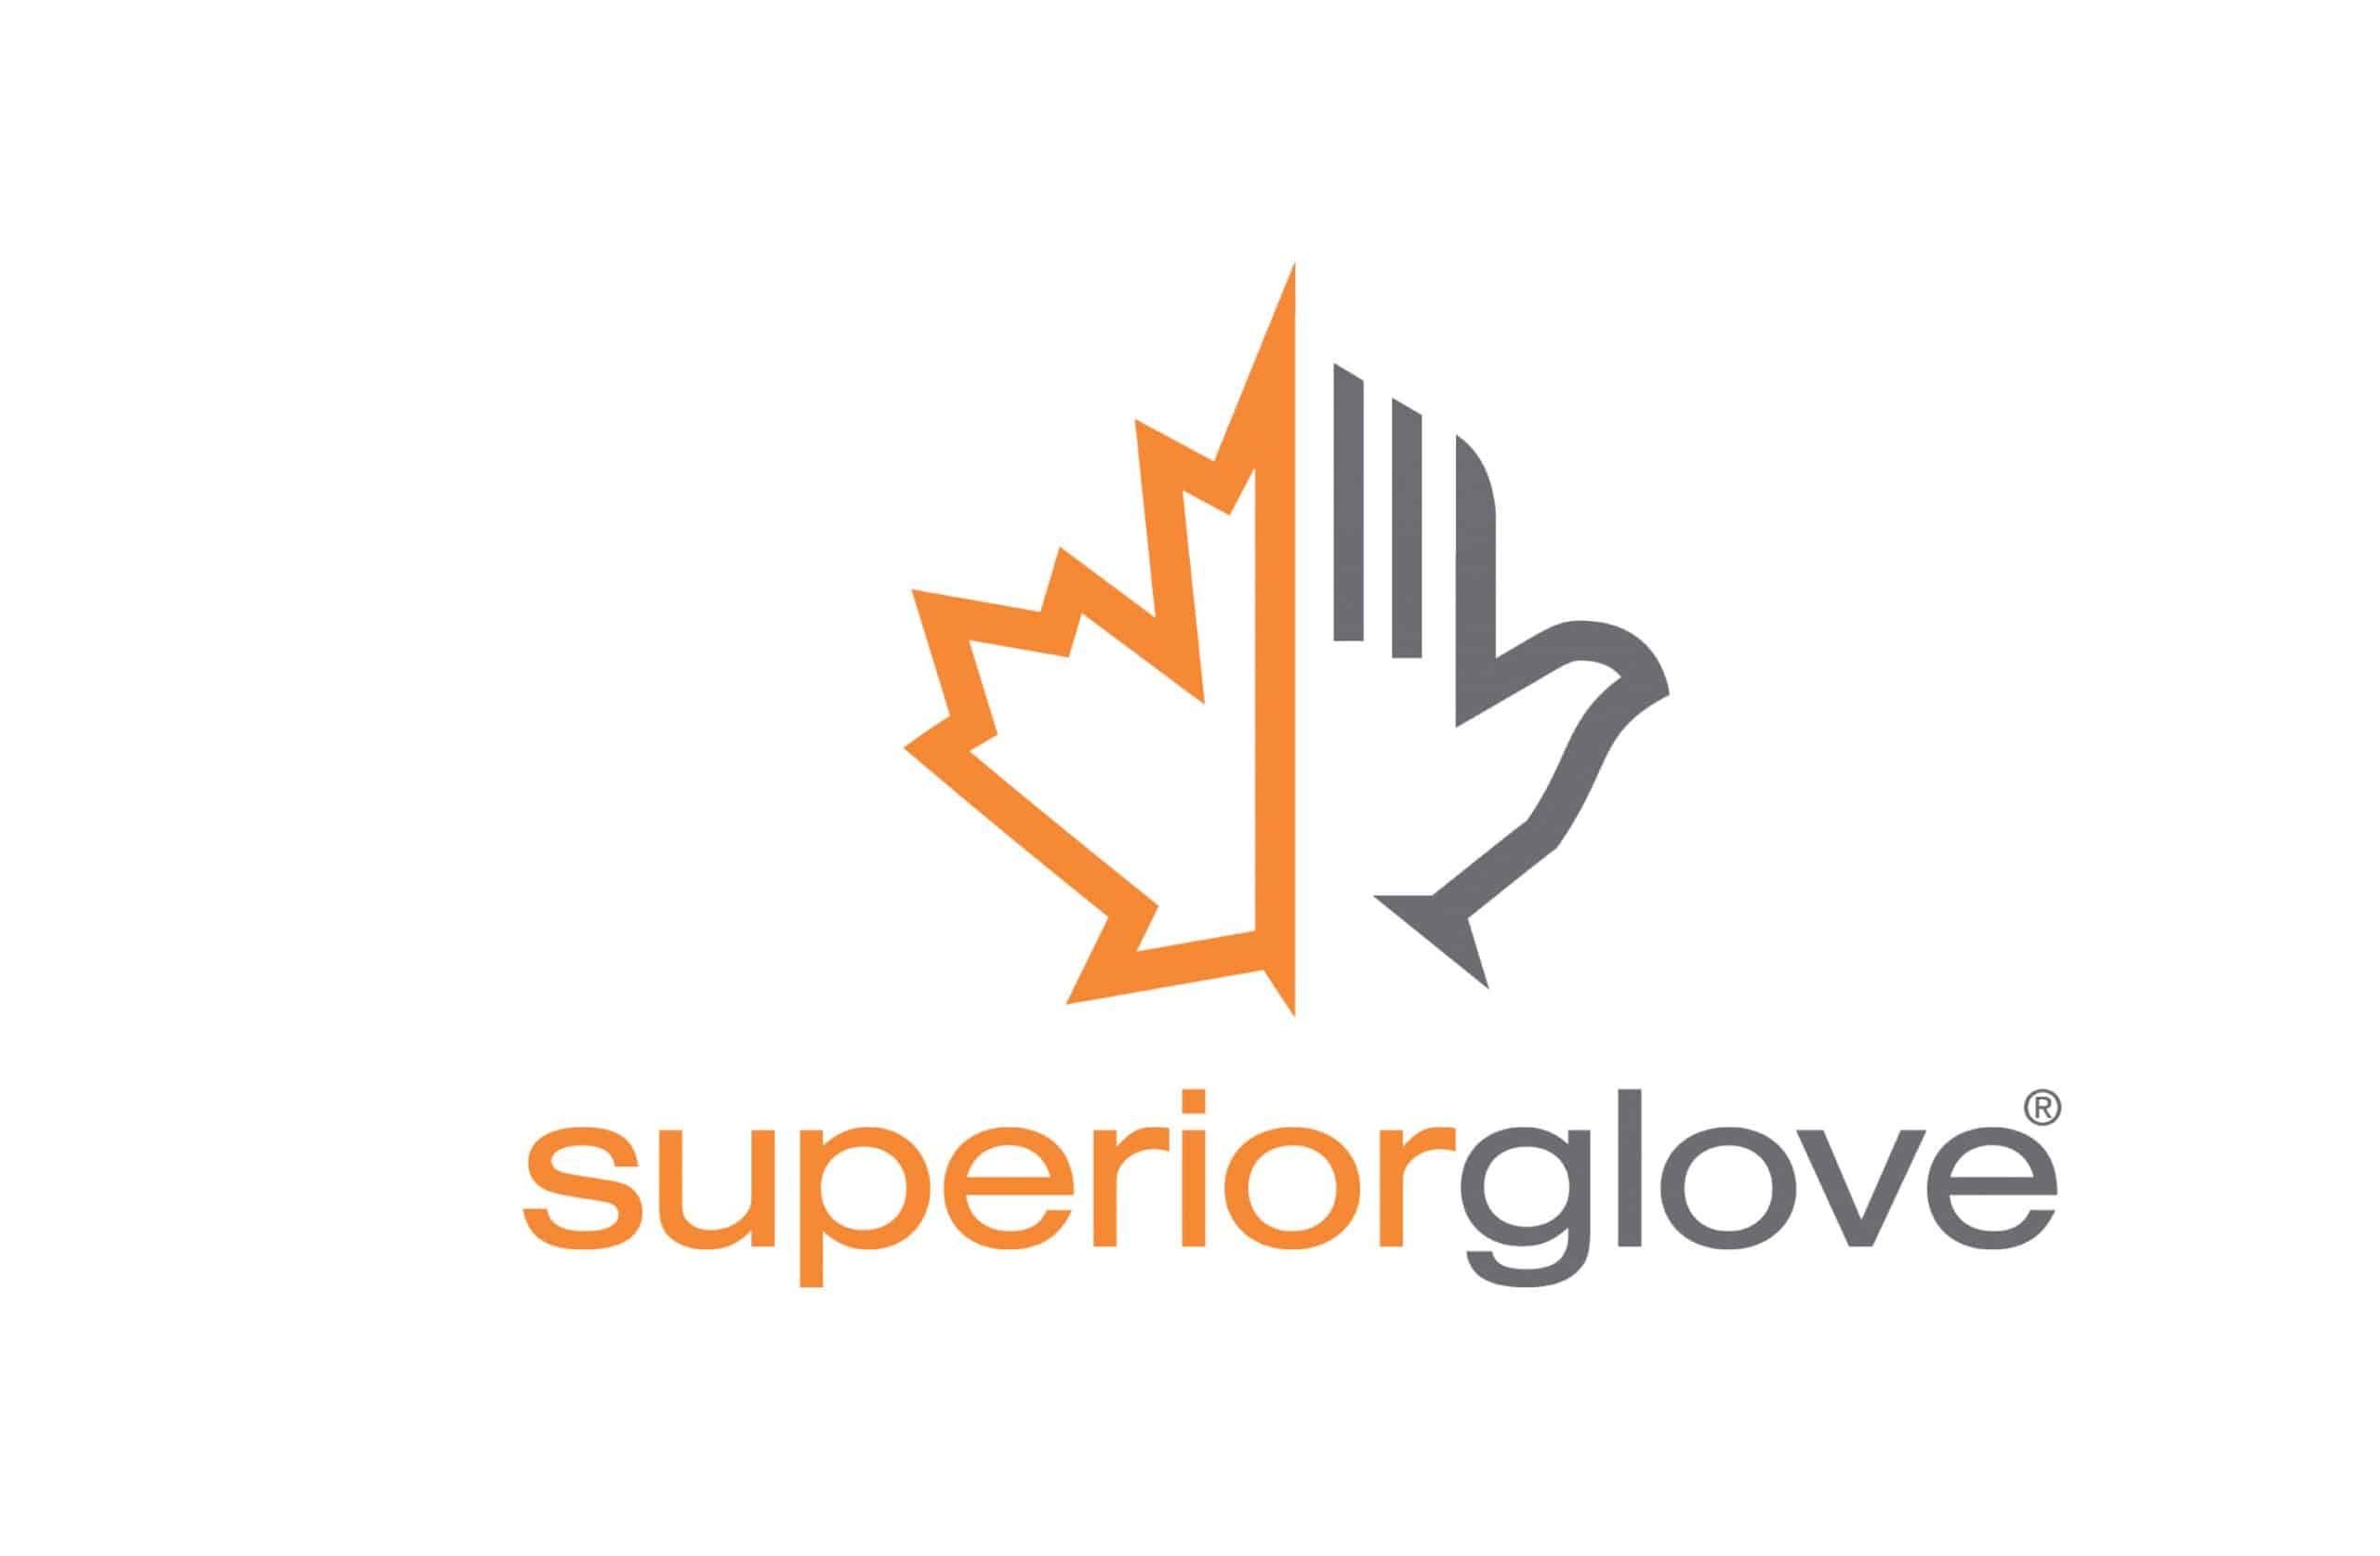 superiorglove logo